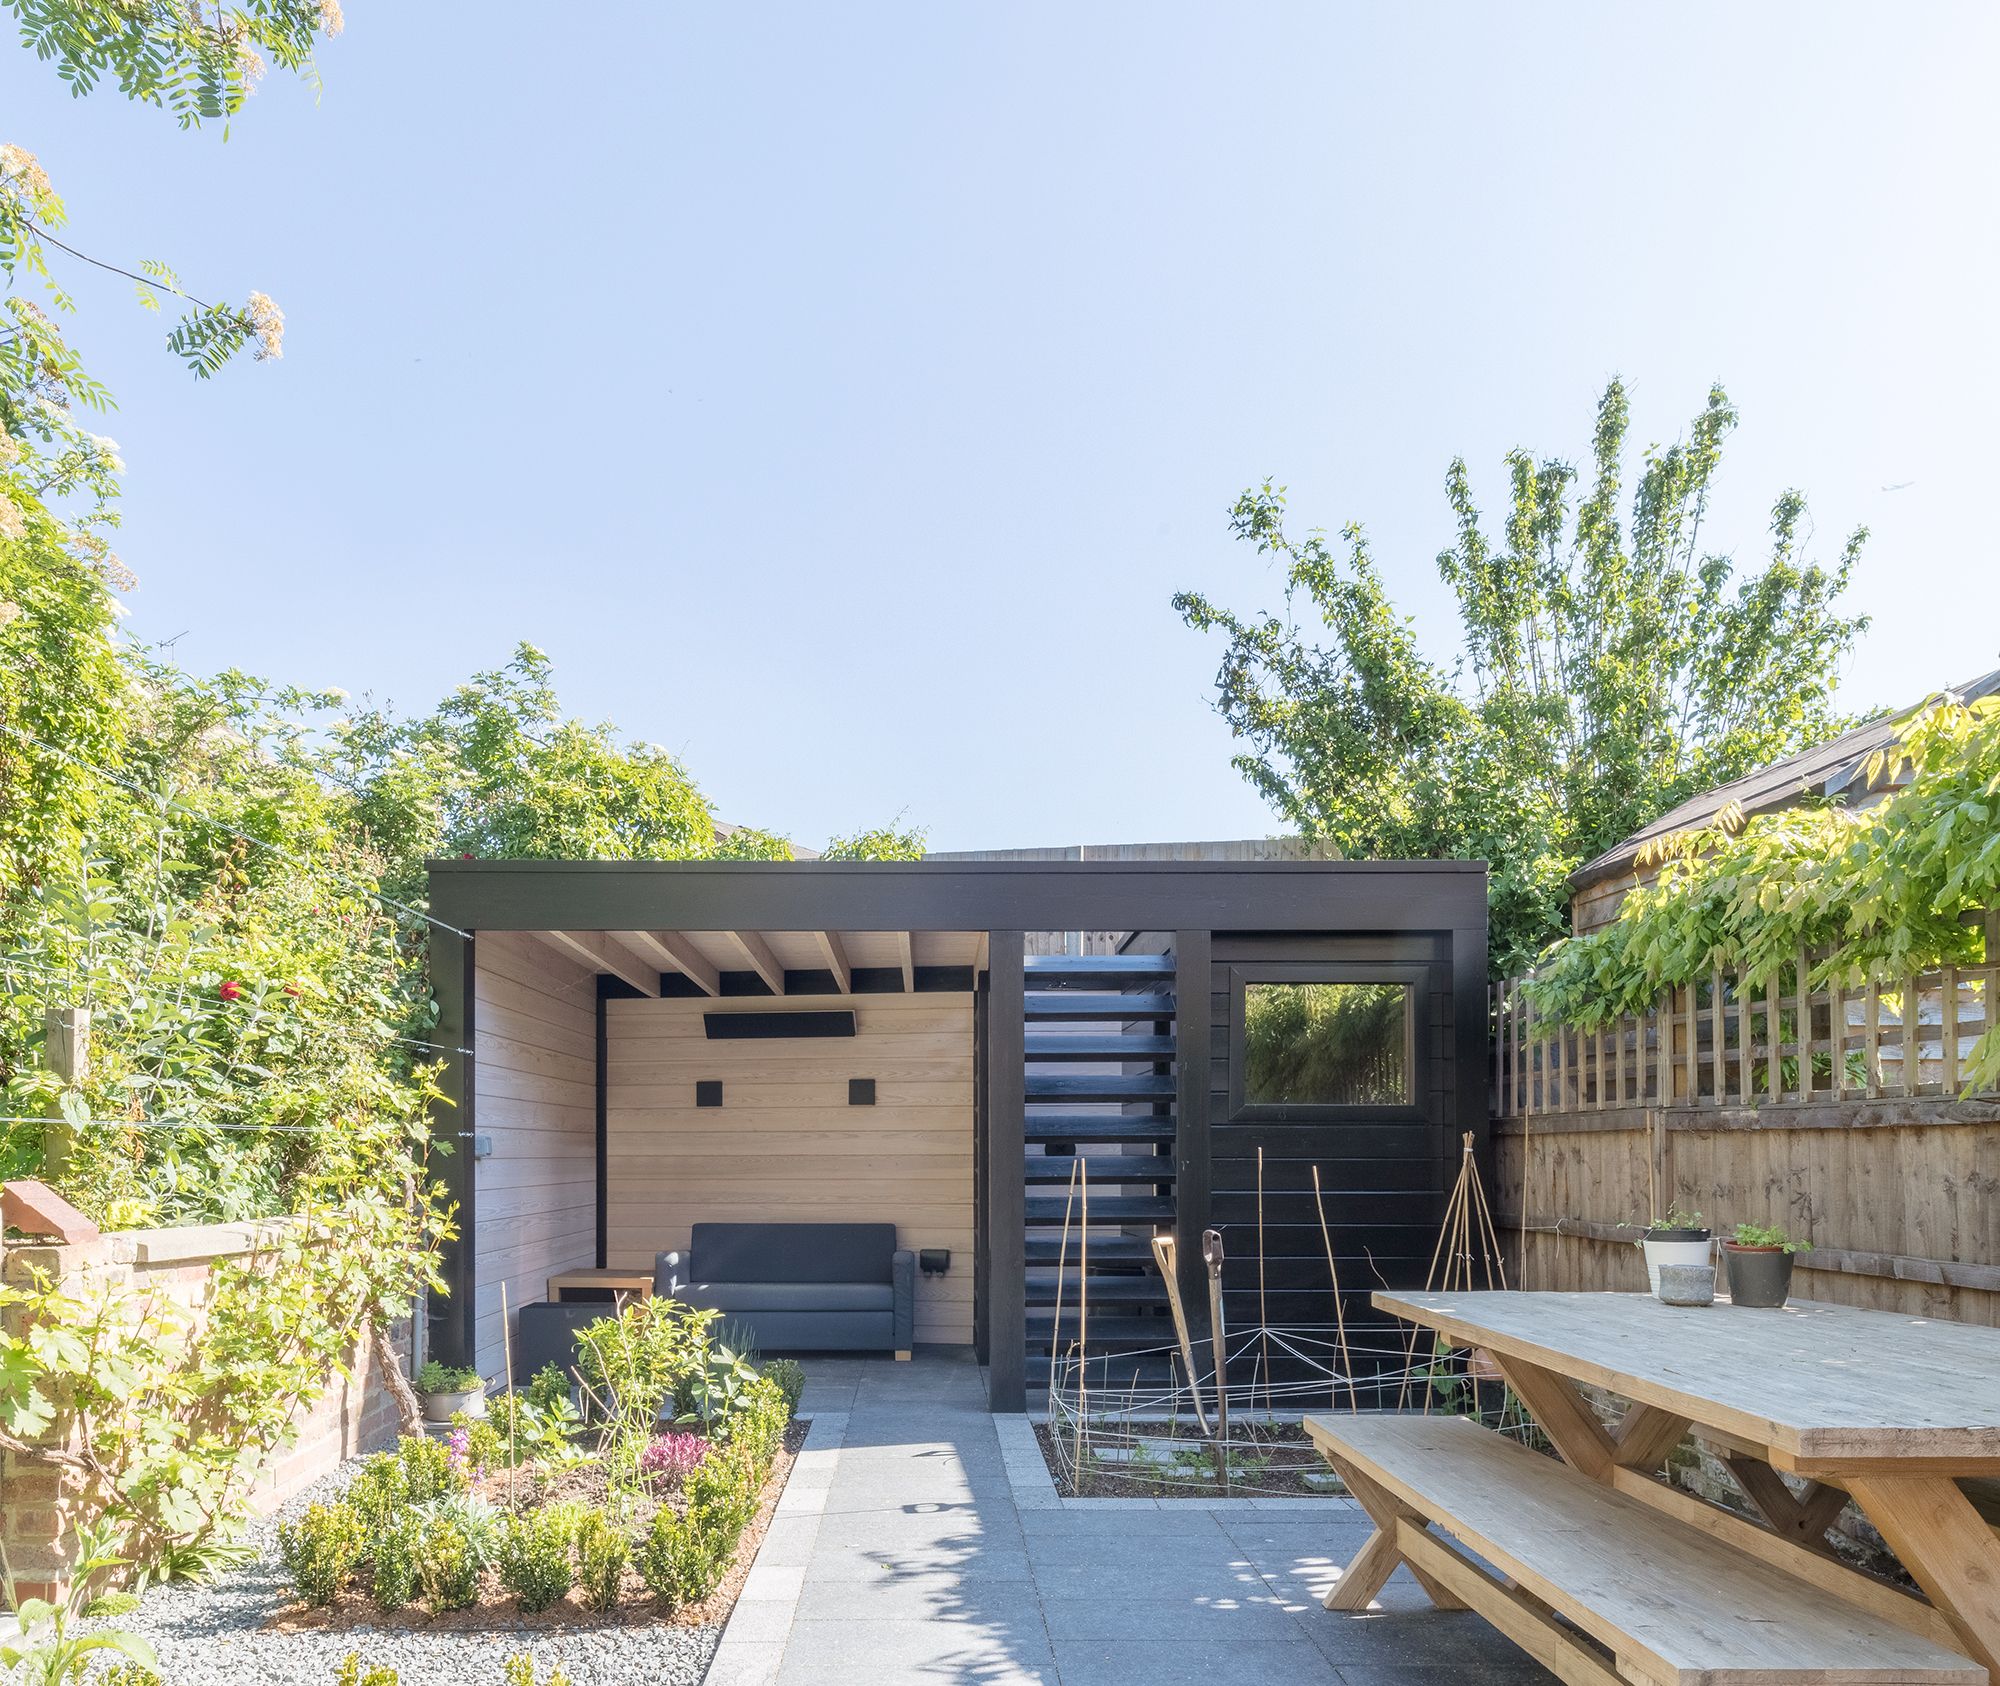 29 Small Backyard Ideas Simple, How To Landscape A Small Rectangular Backyard Ideas